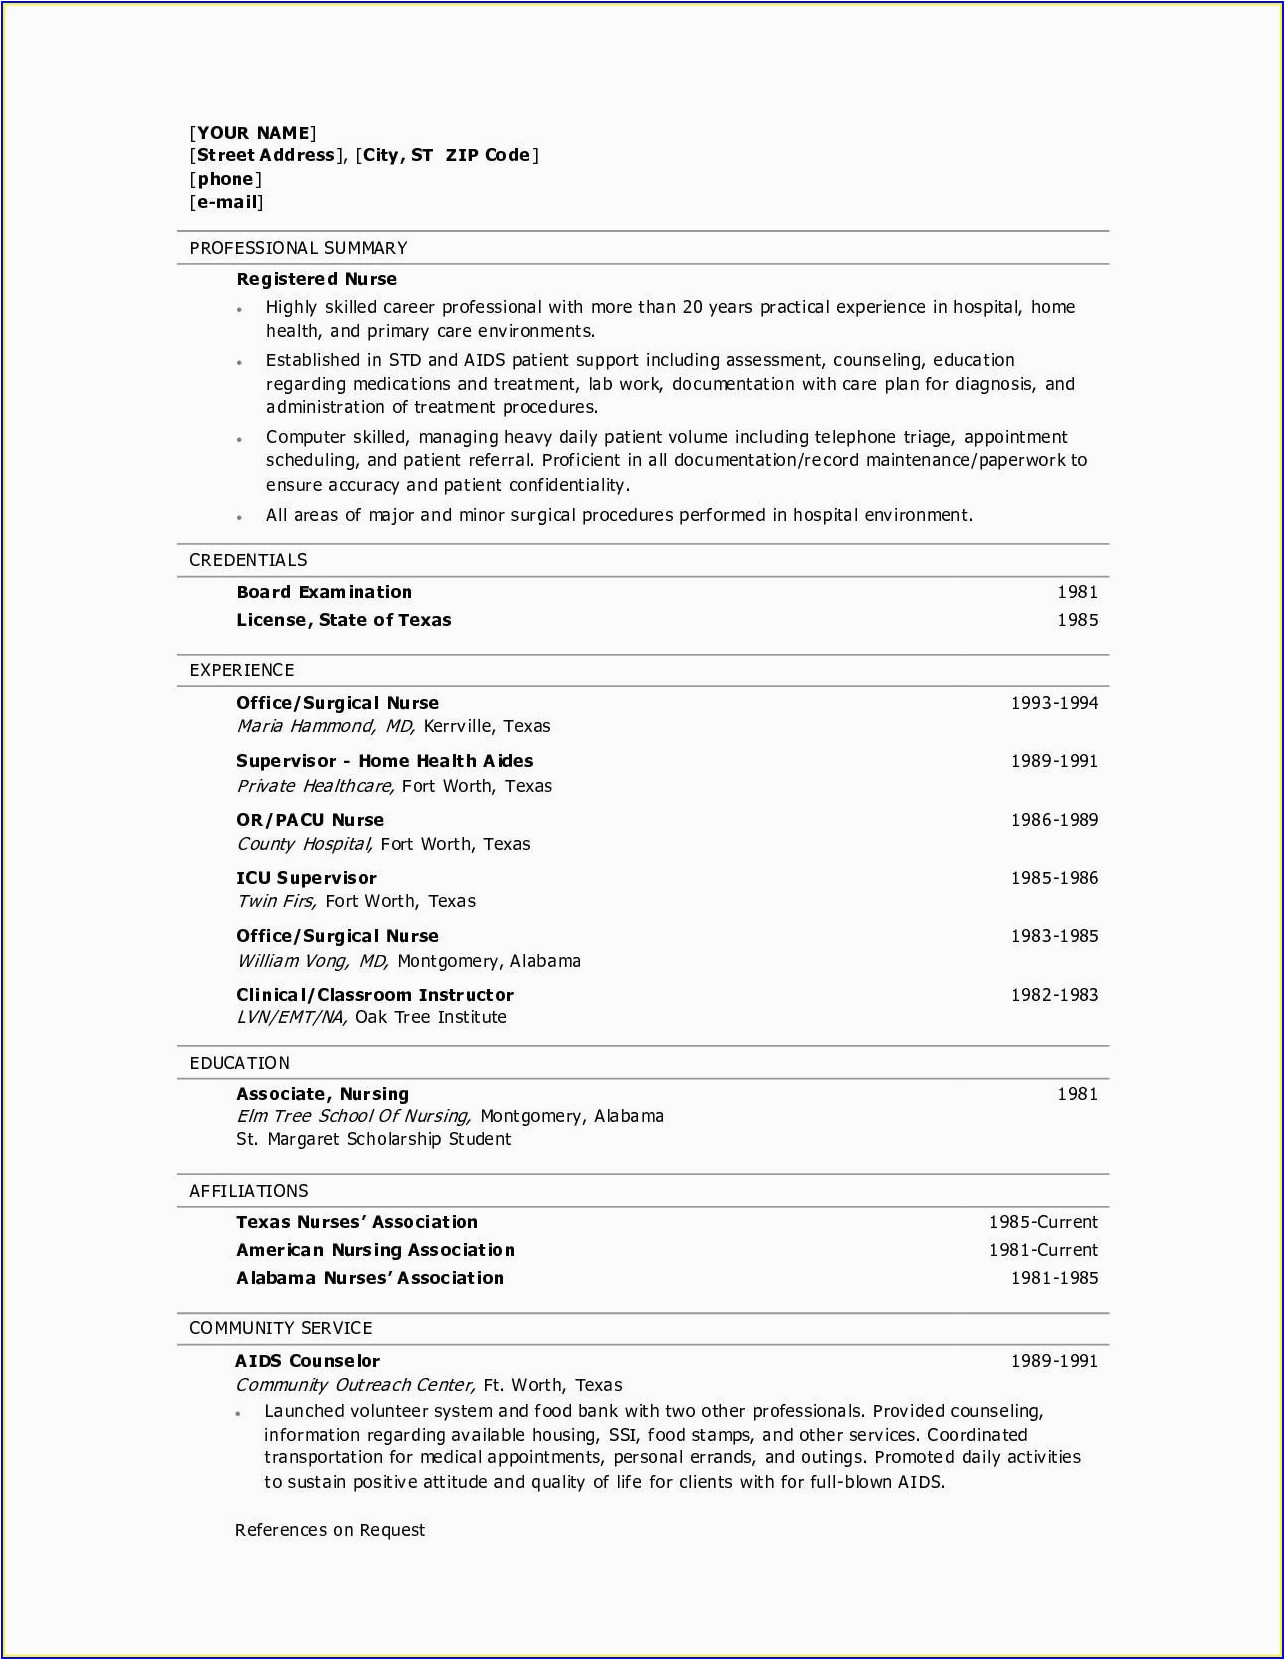 Sample Resume format for Nurses In the Philippines Registered Nurse Resume Sample format Philippines